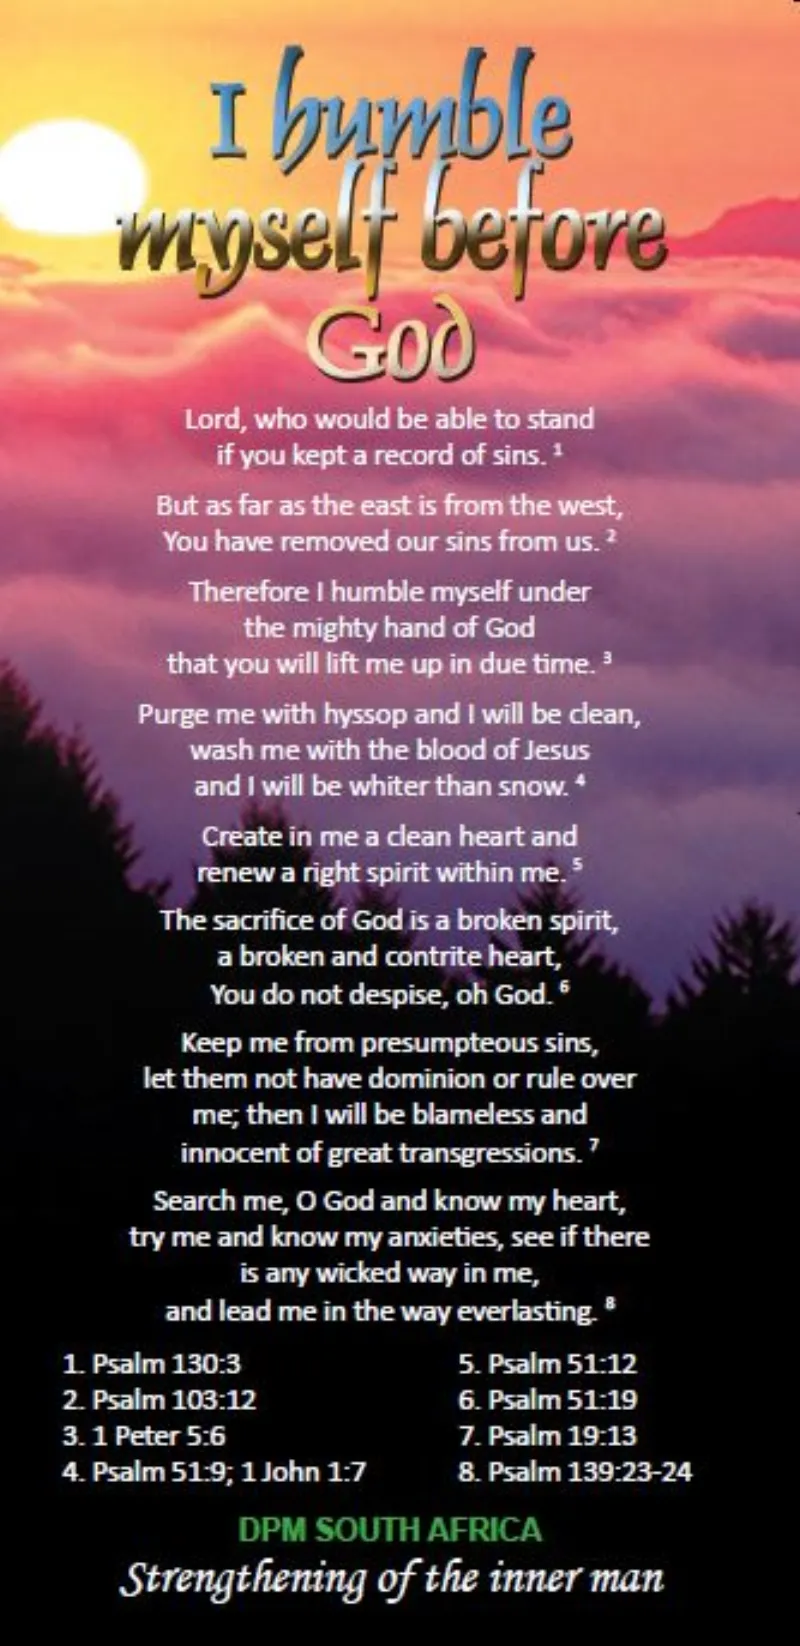 Proclamation - I Humble Myself